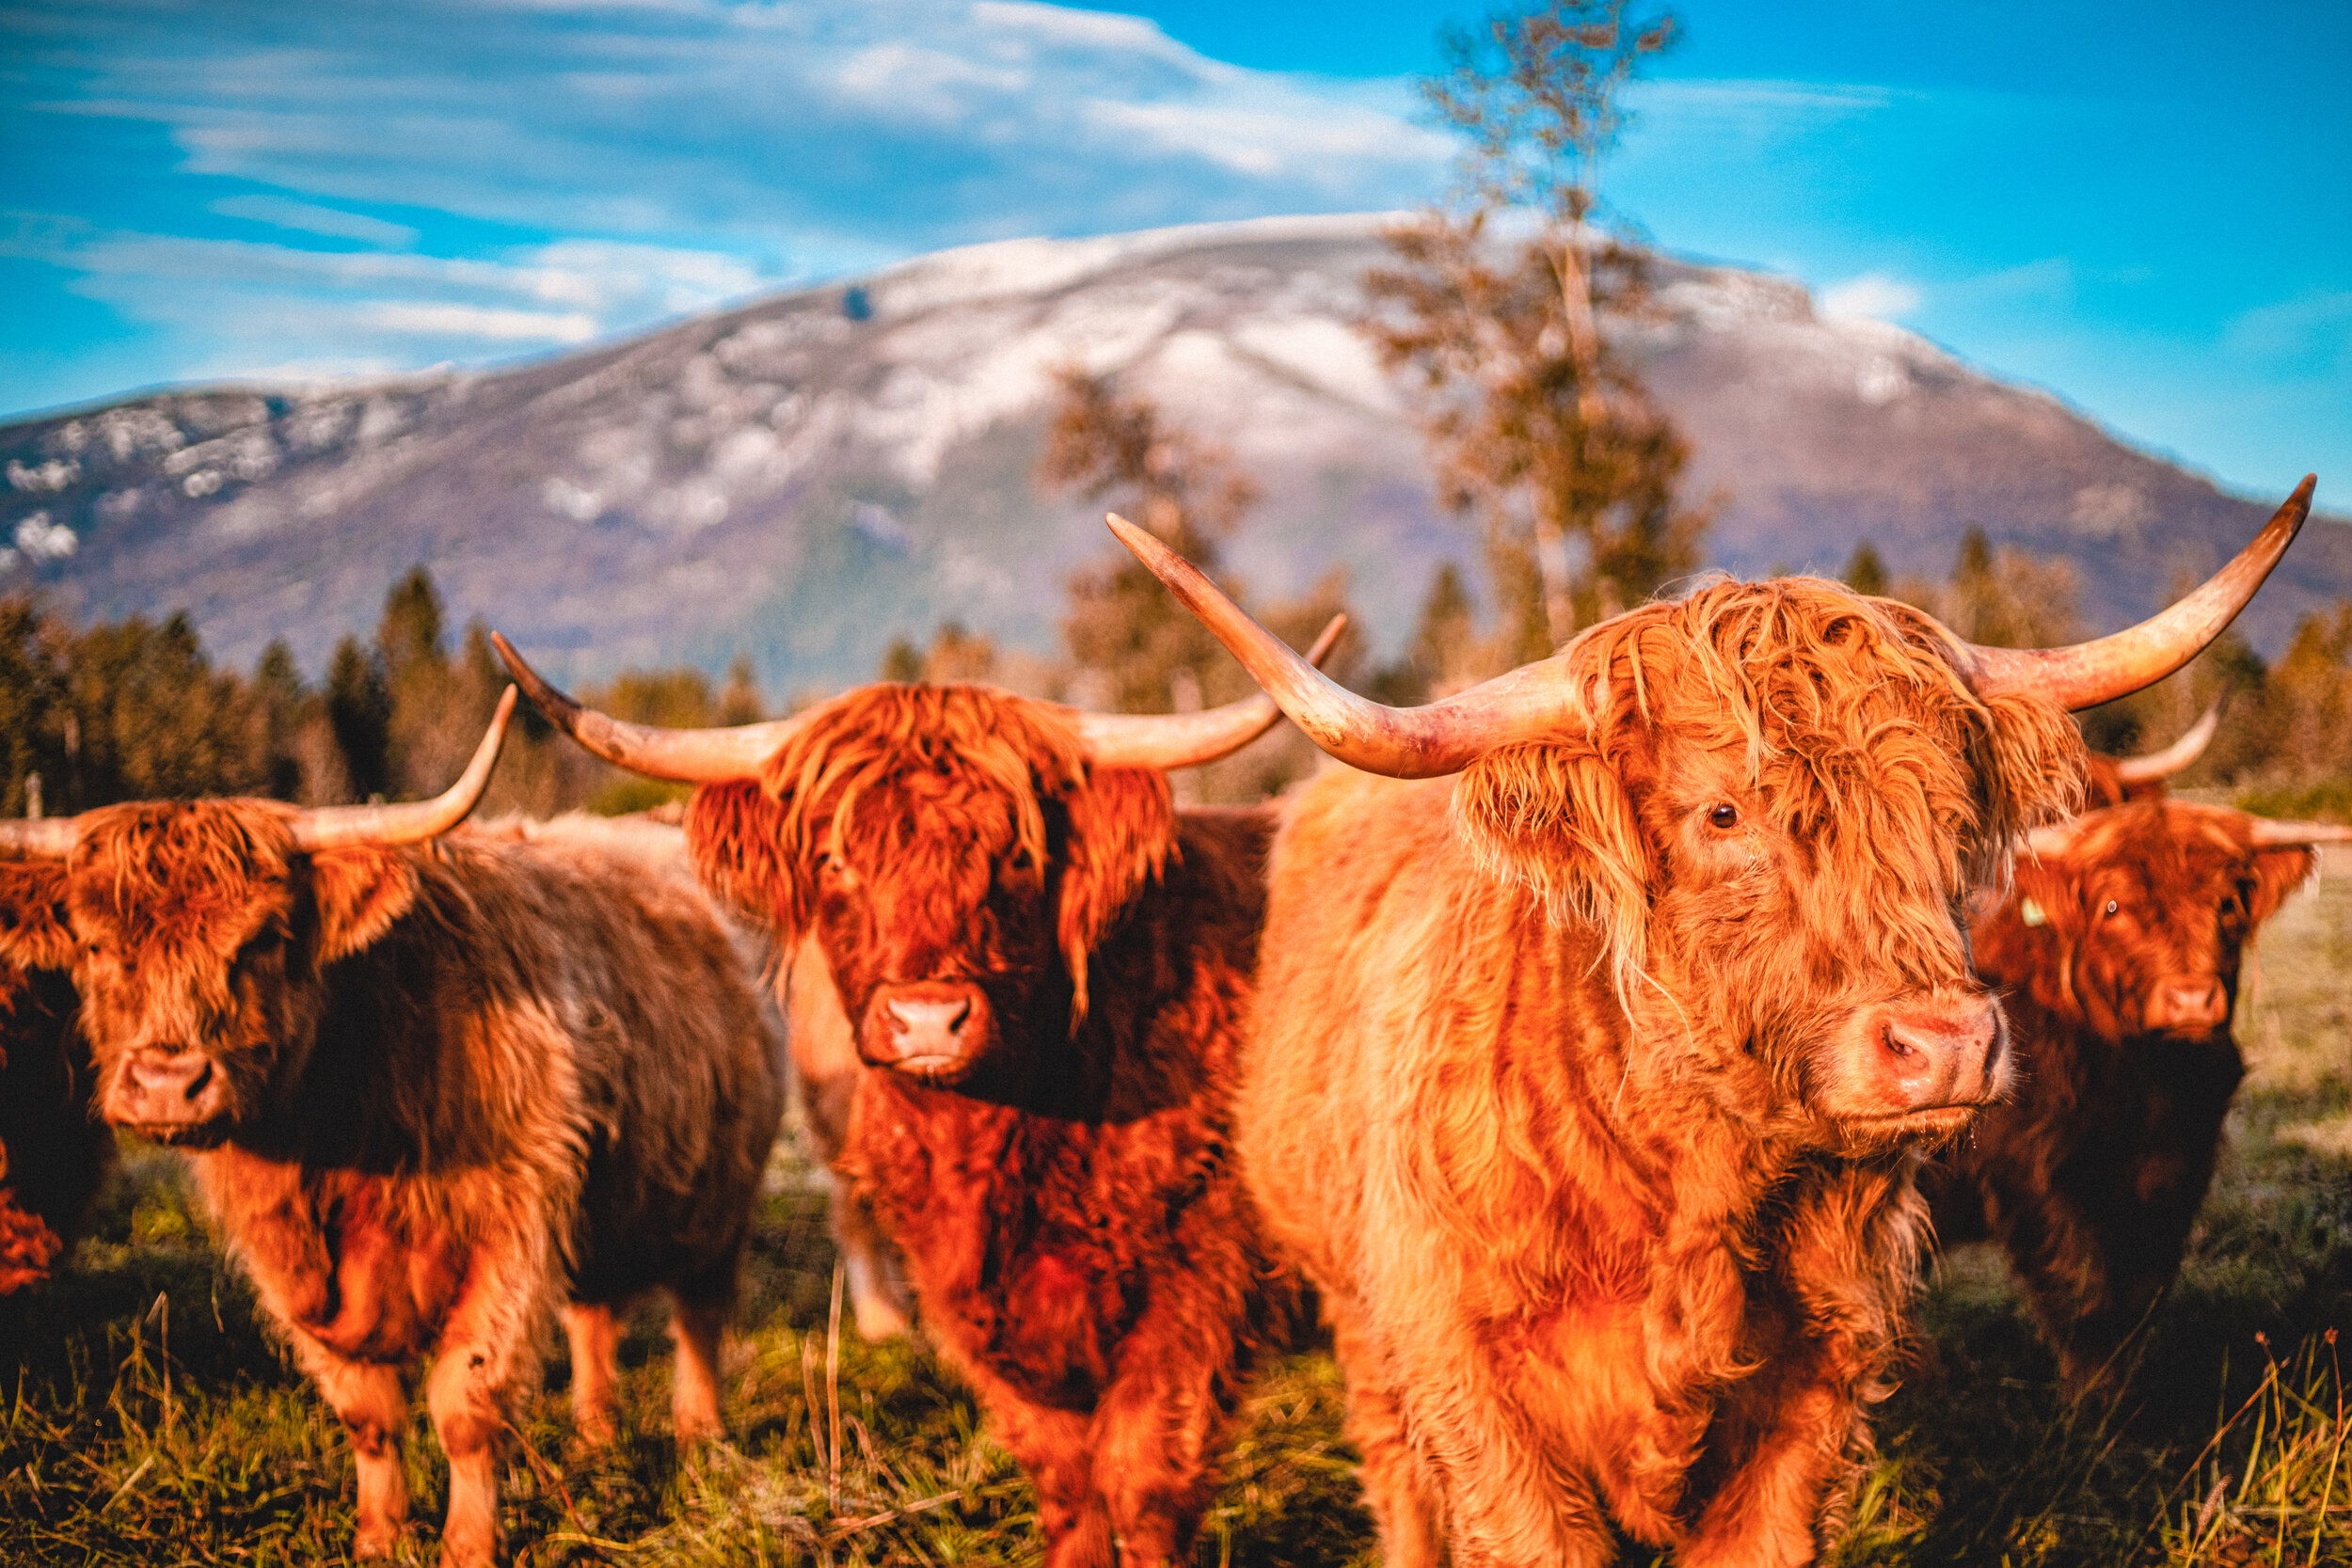 miniature highland cows